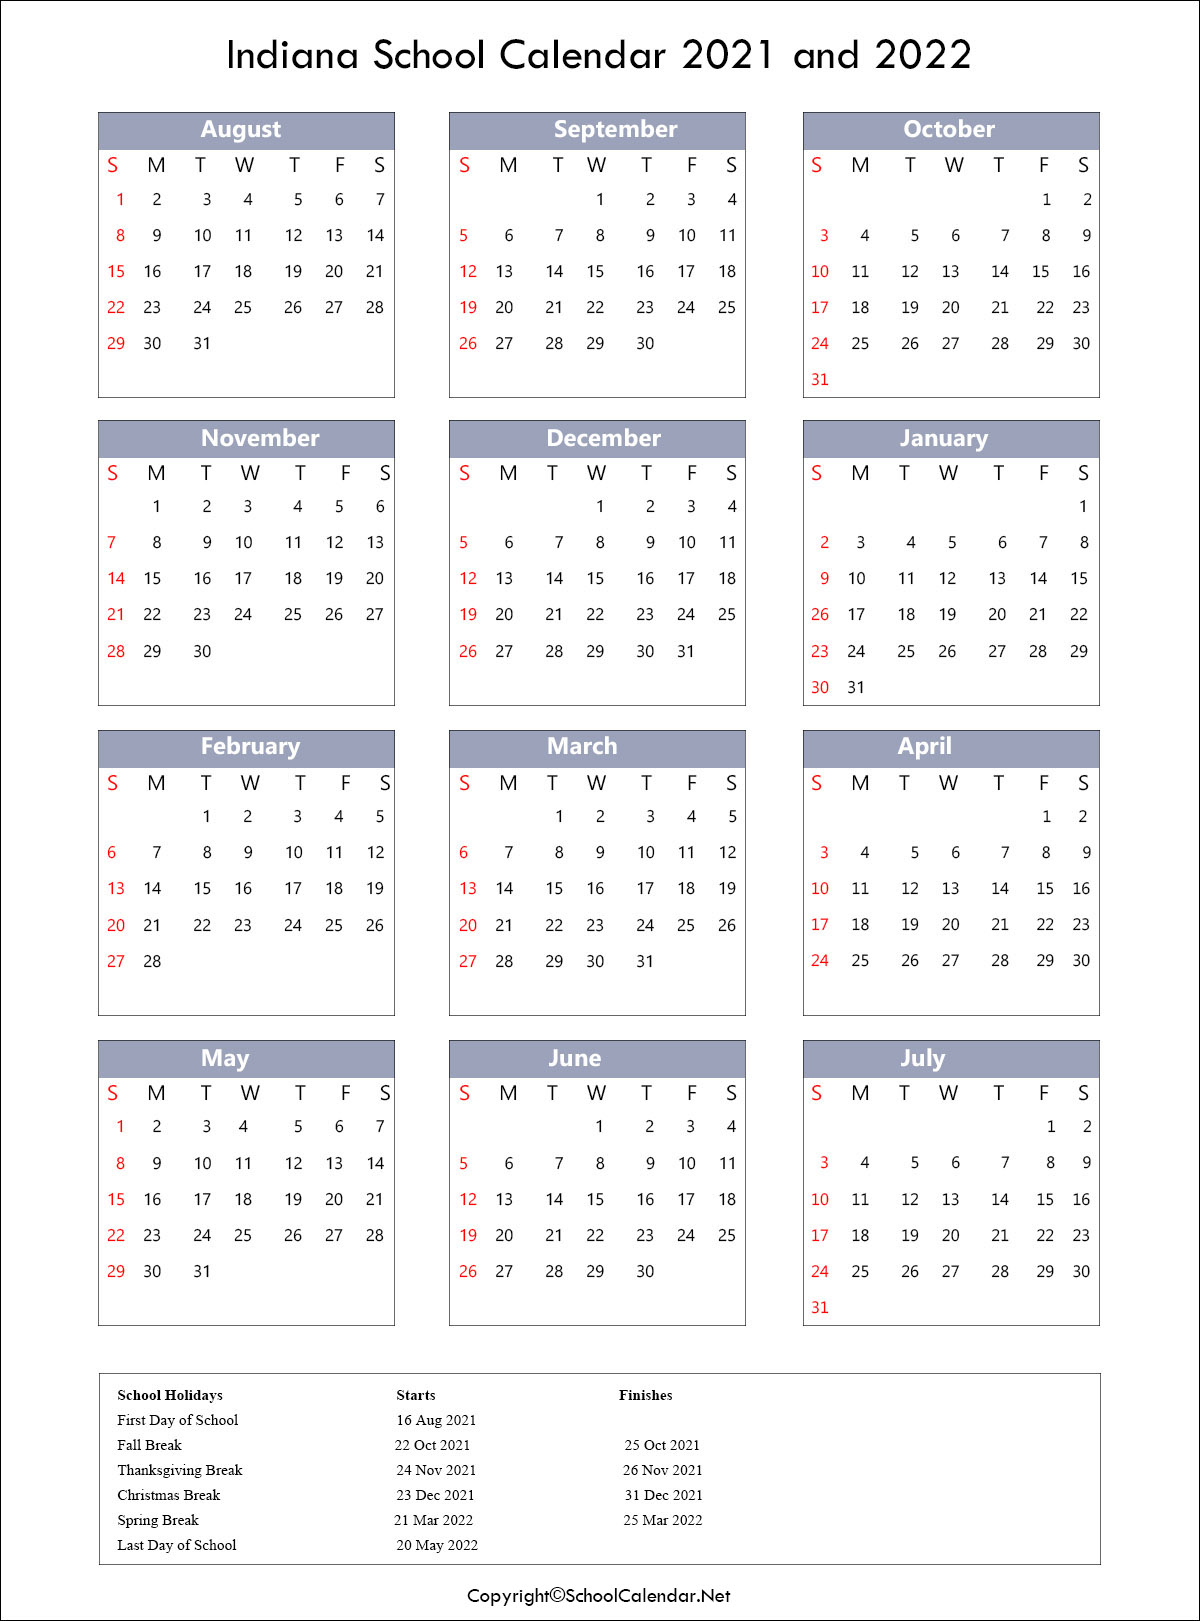 Indiana School Calendar 2021-2022 [County School District]